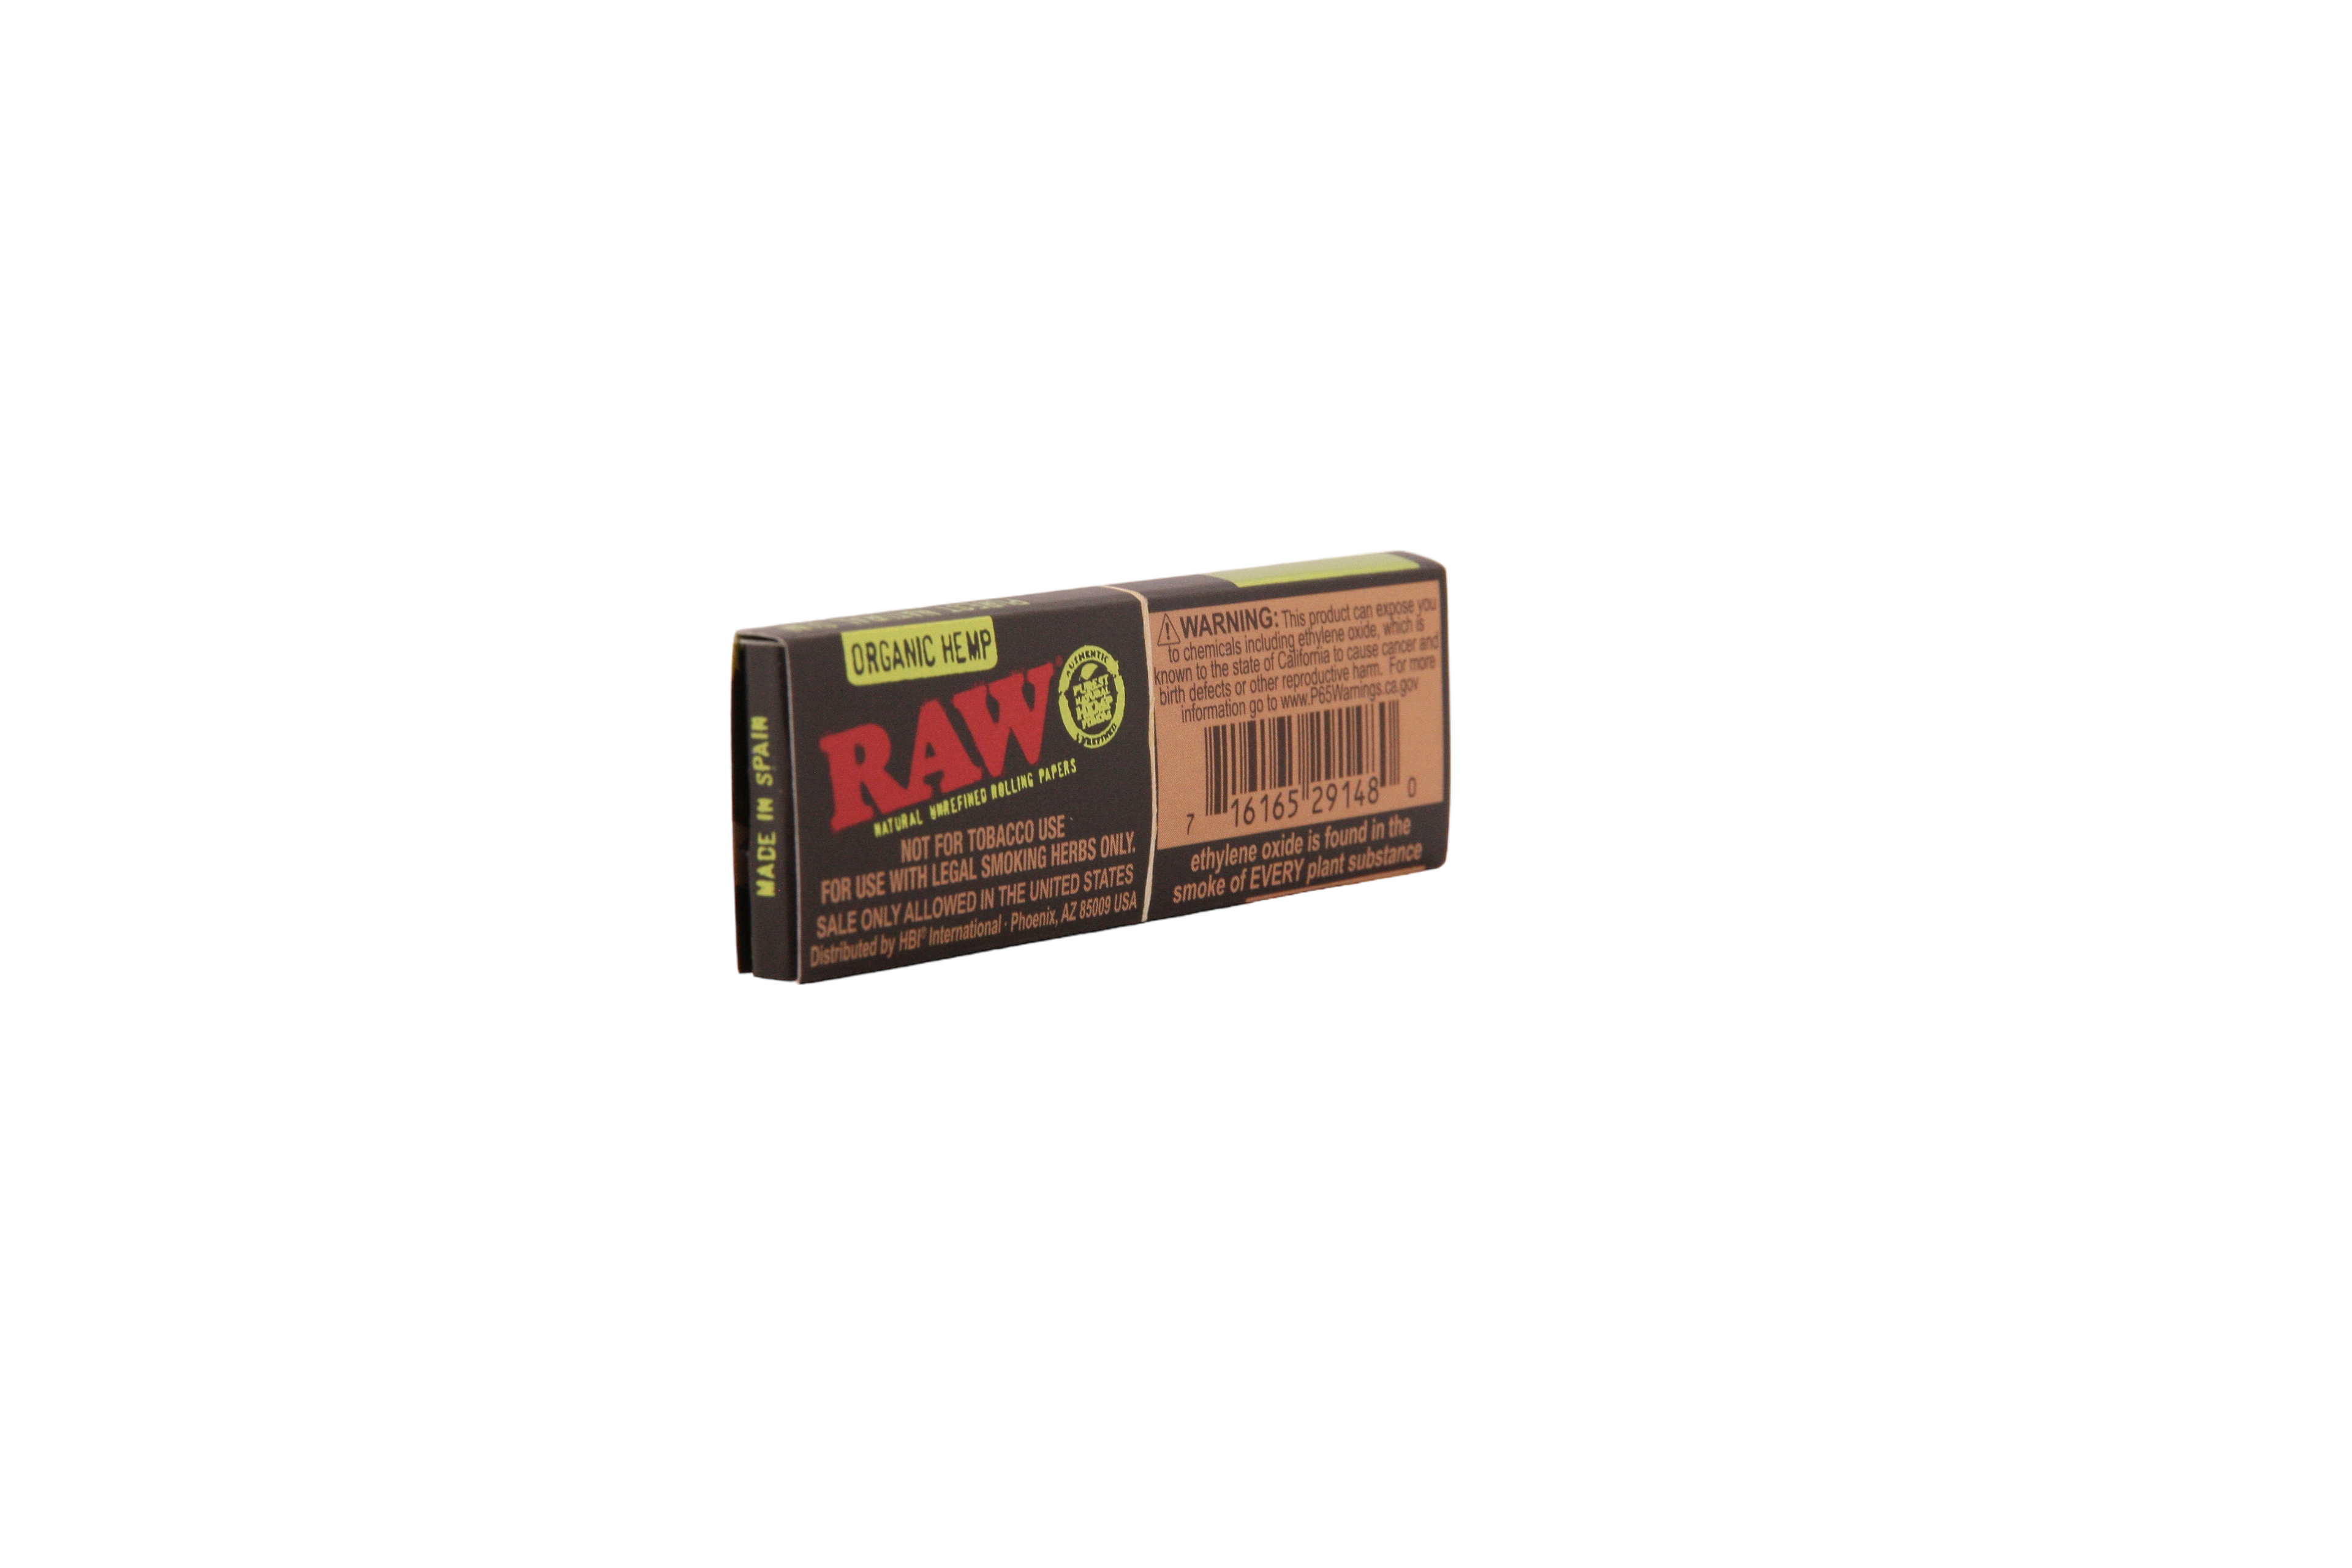 Raw Black Organic Hemp Papers - 1 1/4